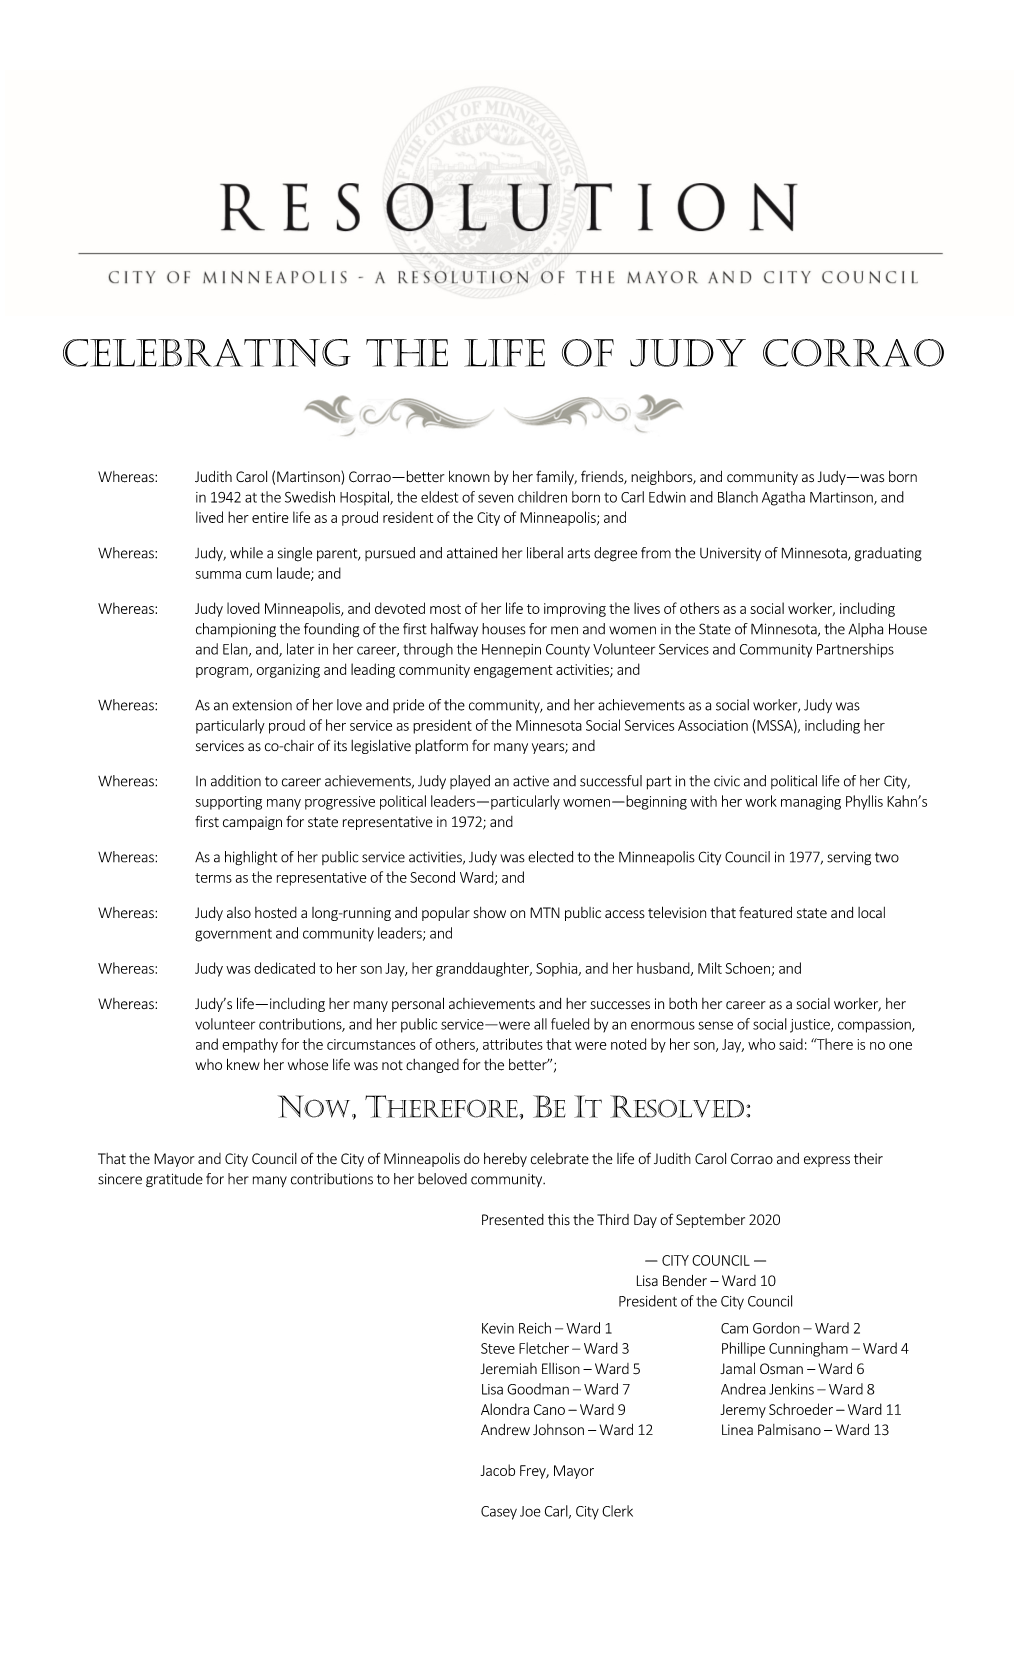 Judy Corrao Honorary Resolution